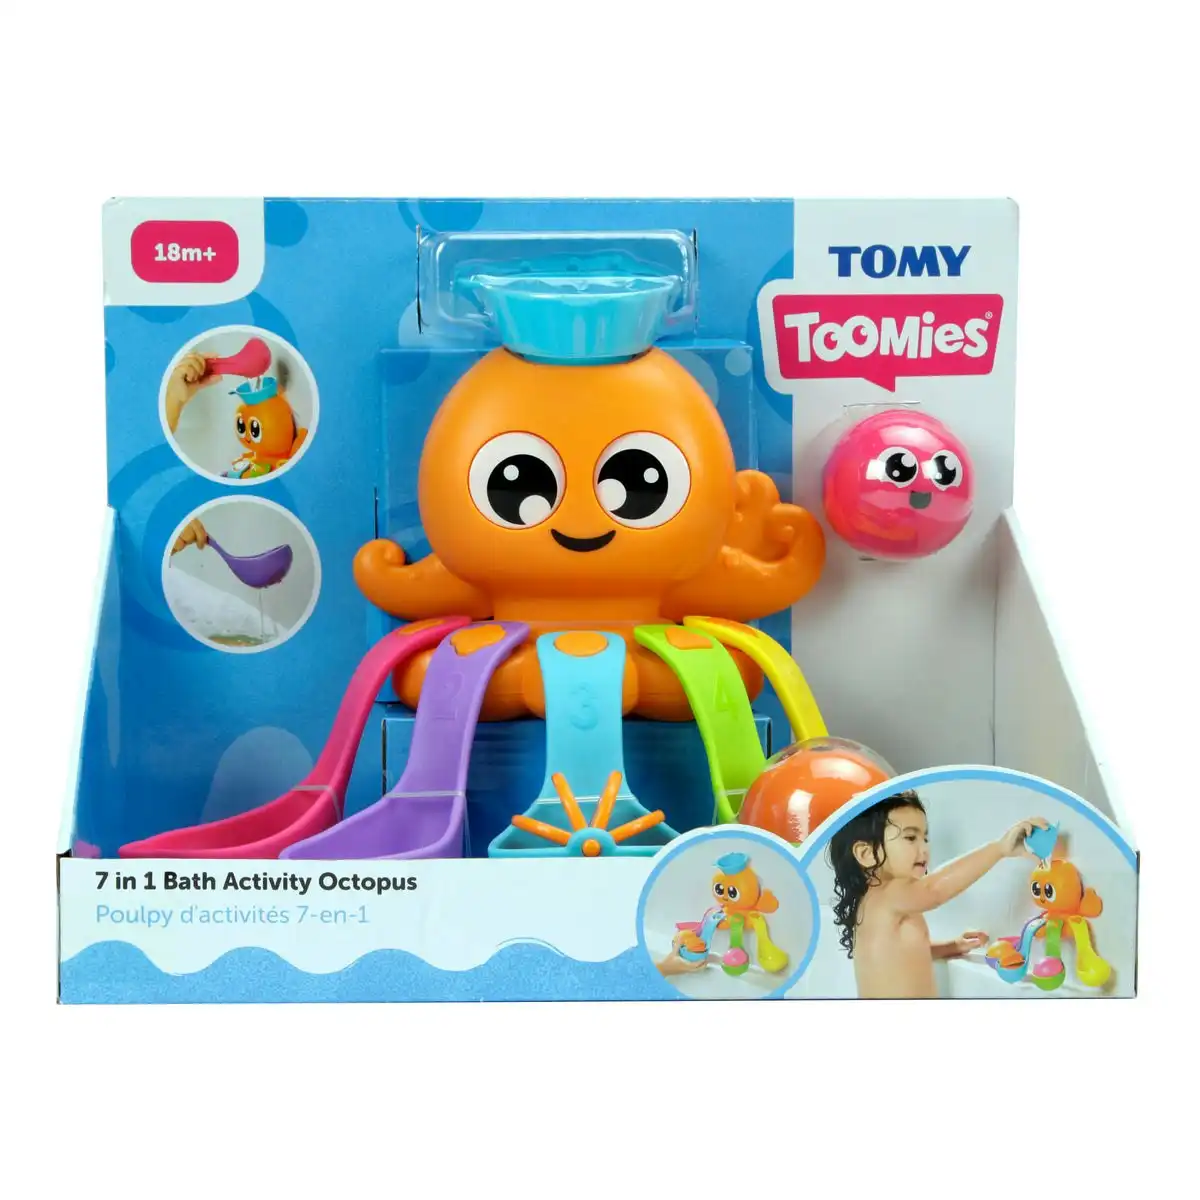 TOMY - 7 In 1 Bath Activity Octopus Playset